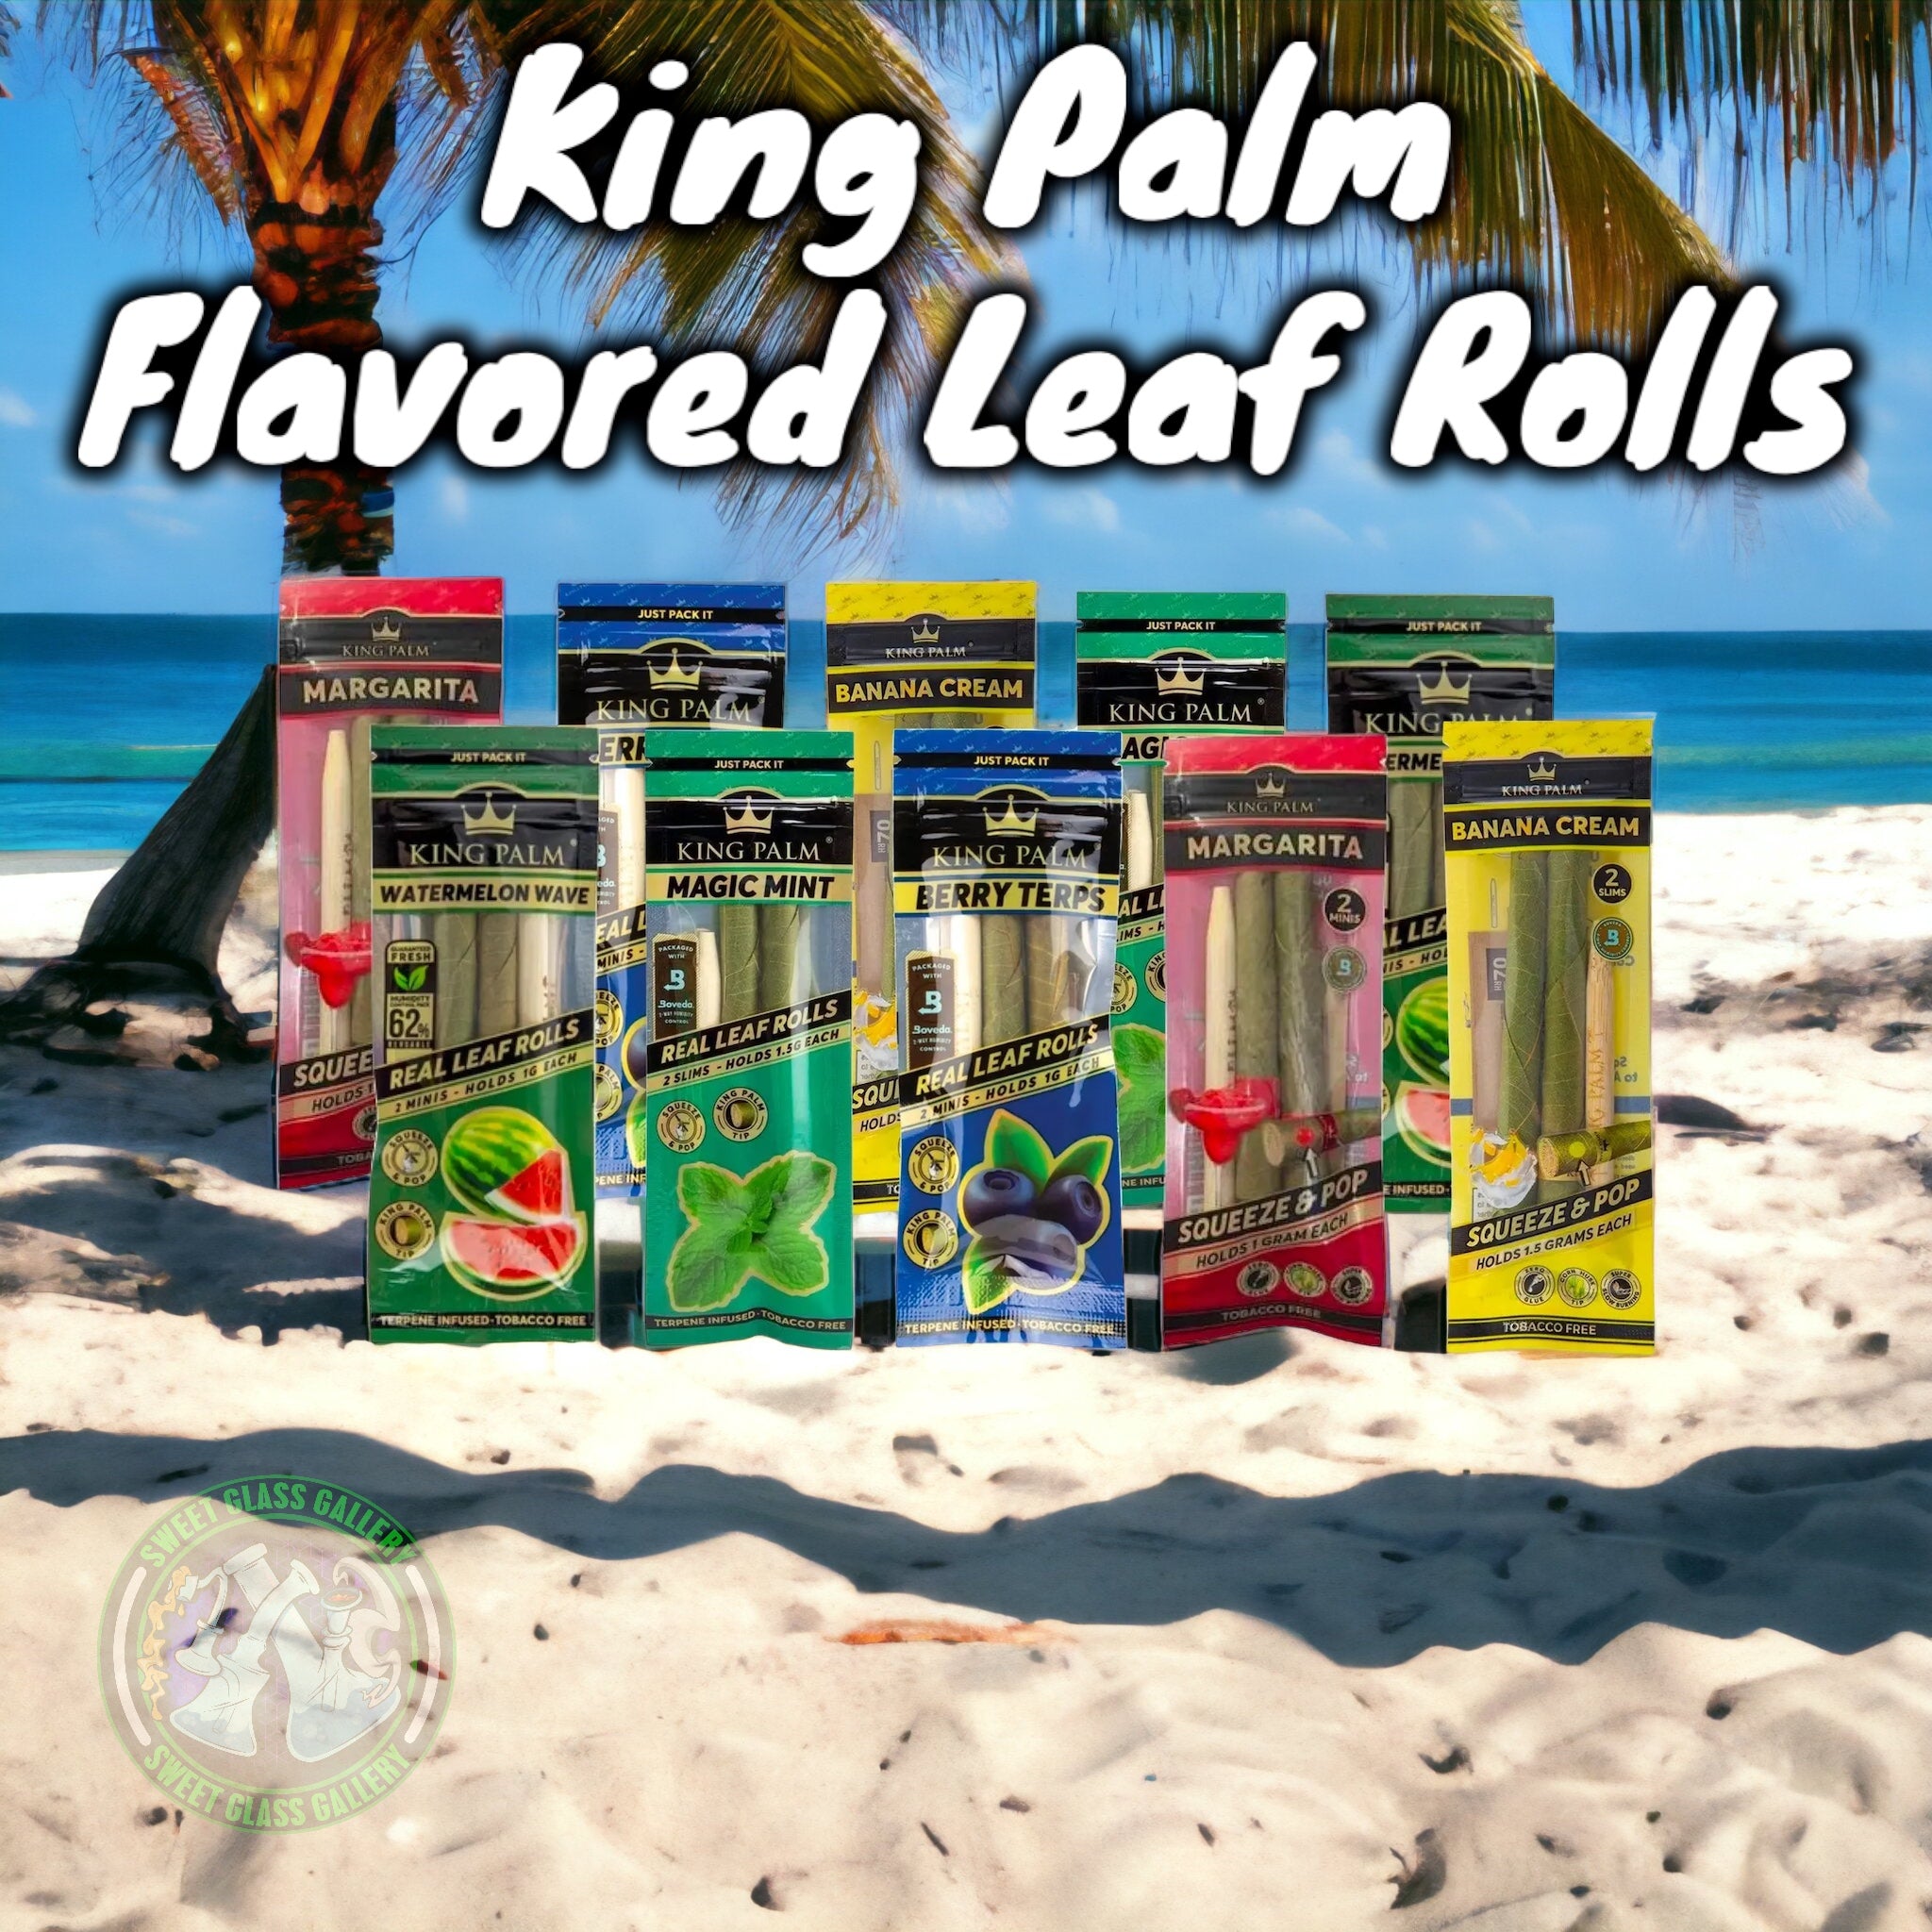 King Palm - Flavored Leaf Rolls